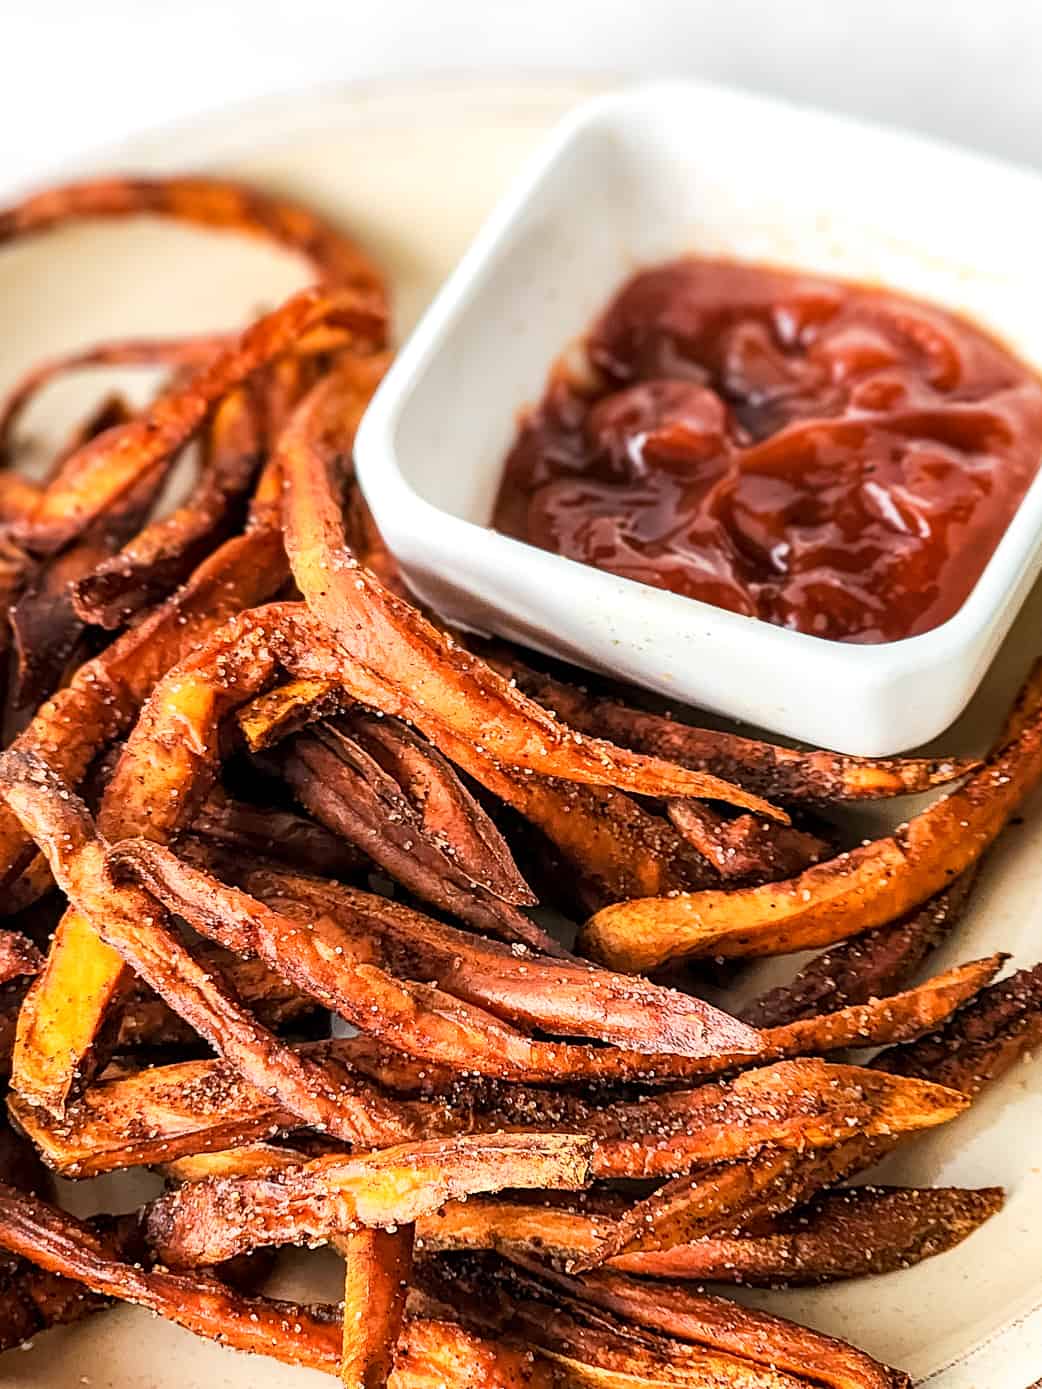 Cinnamon sweet potato fries and ketchup on a plate.